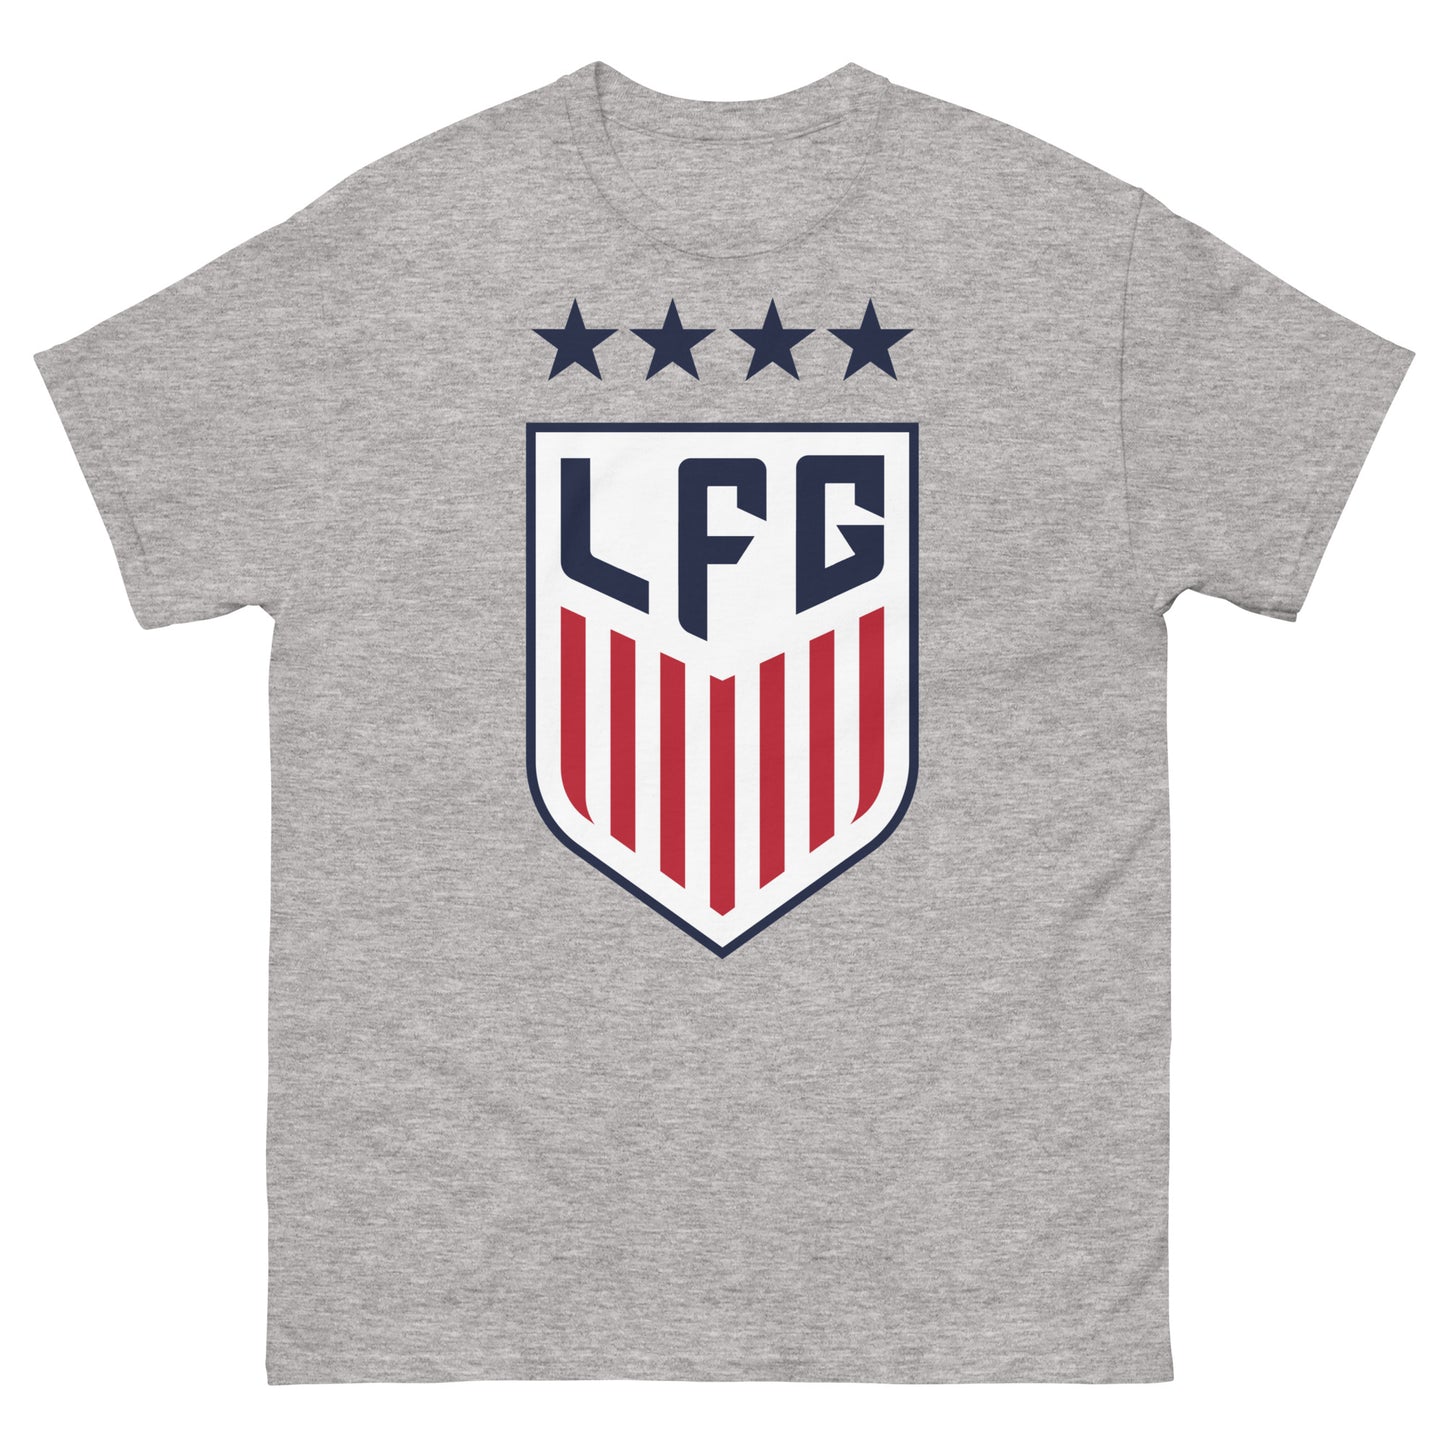 LFG US Soccer Style T-Shirt